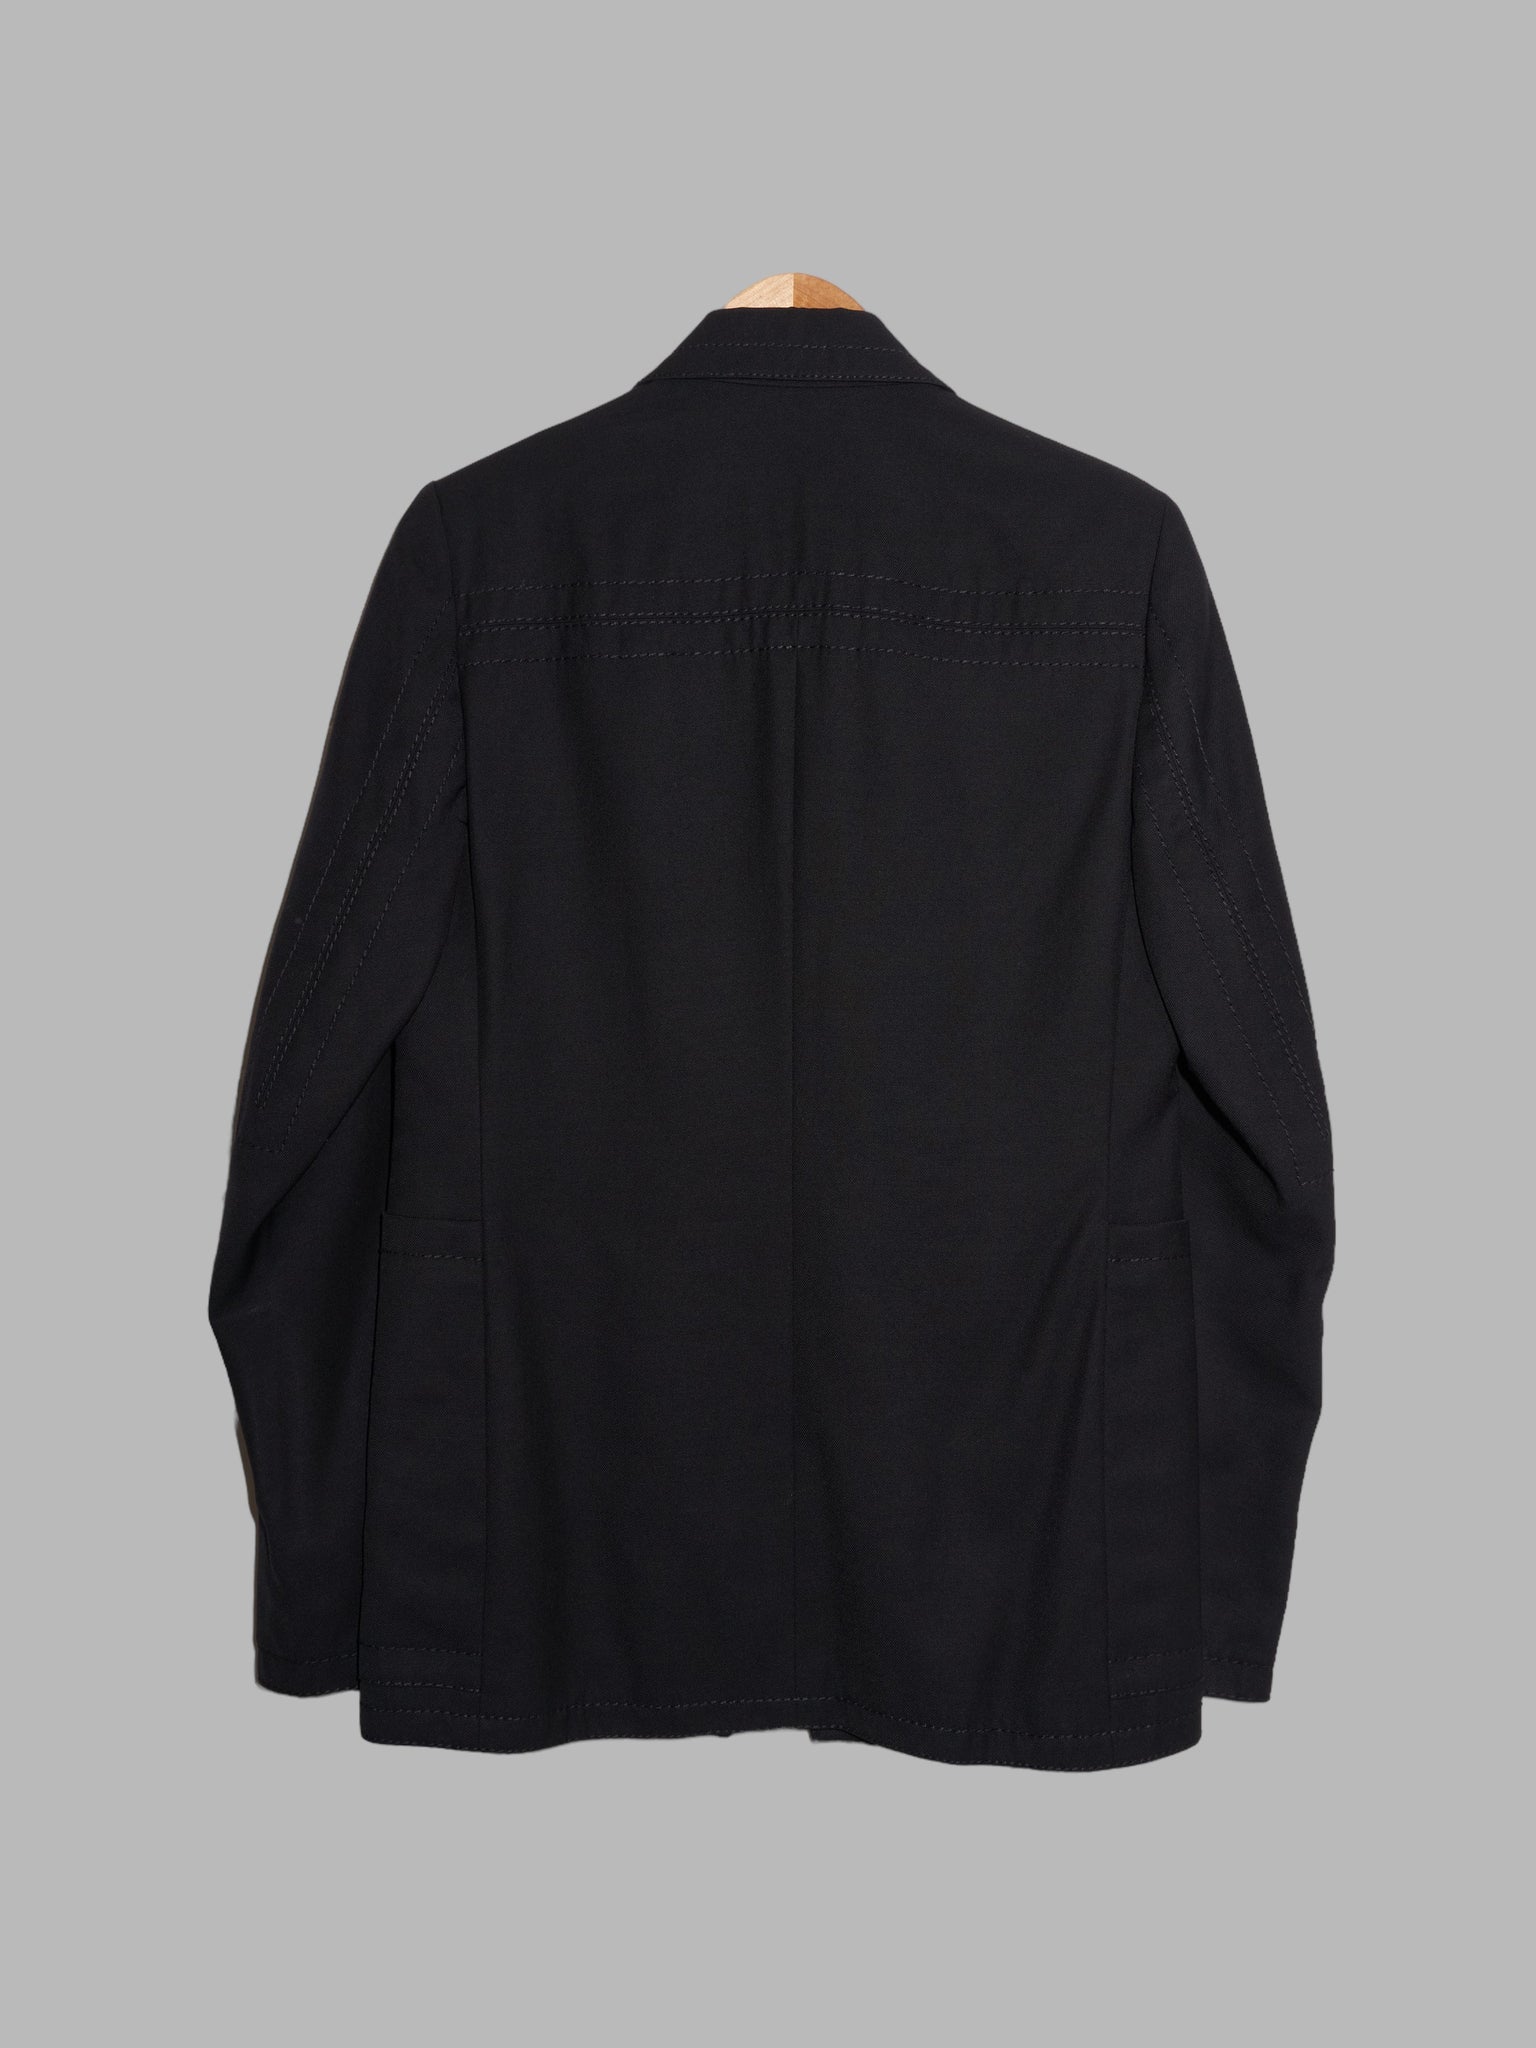 Dirk Bikkembergs 1990s 2000s black wool topstitched two button blazer - size 46